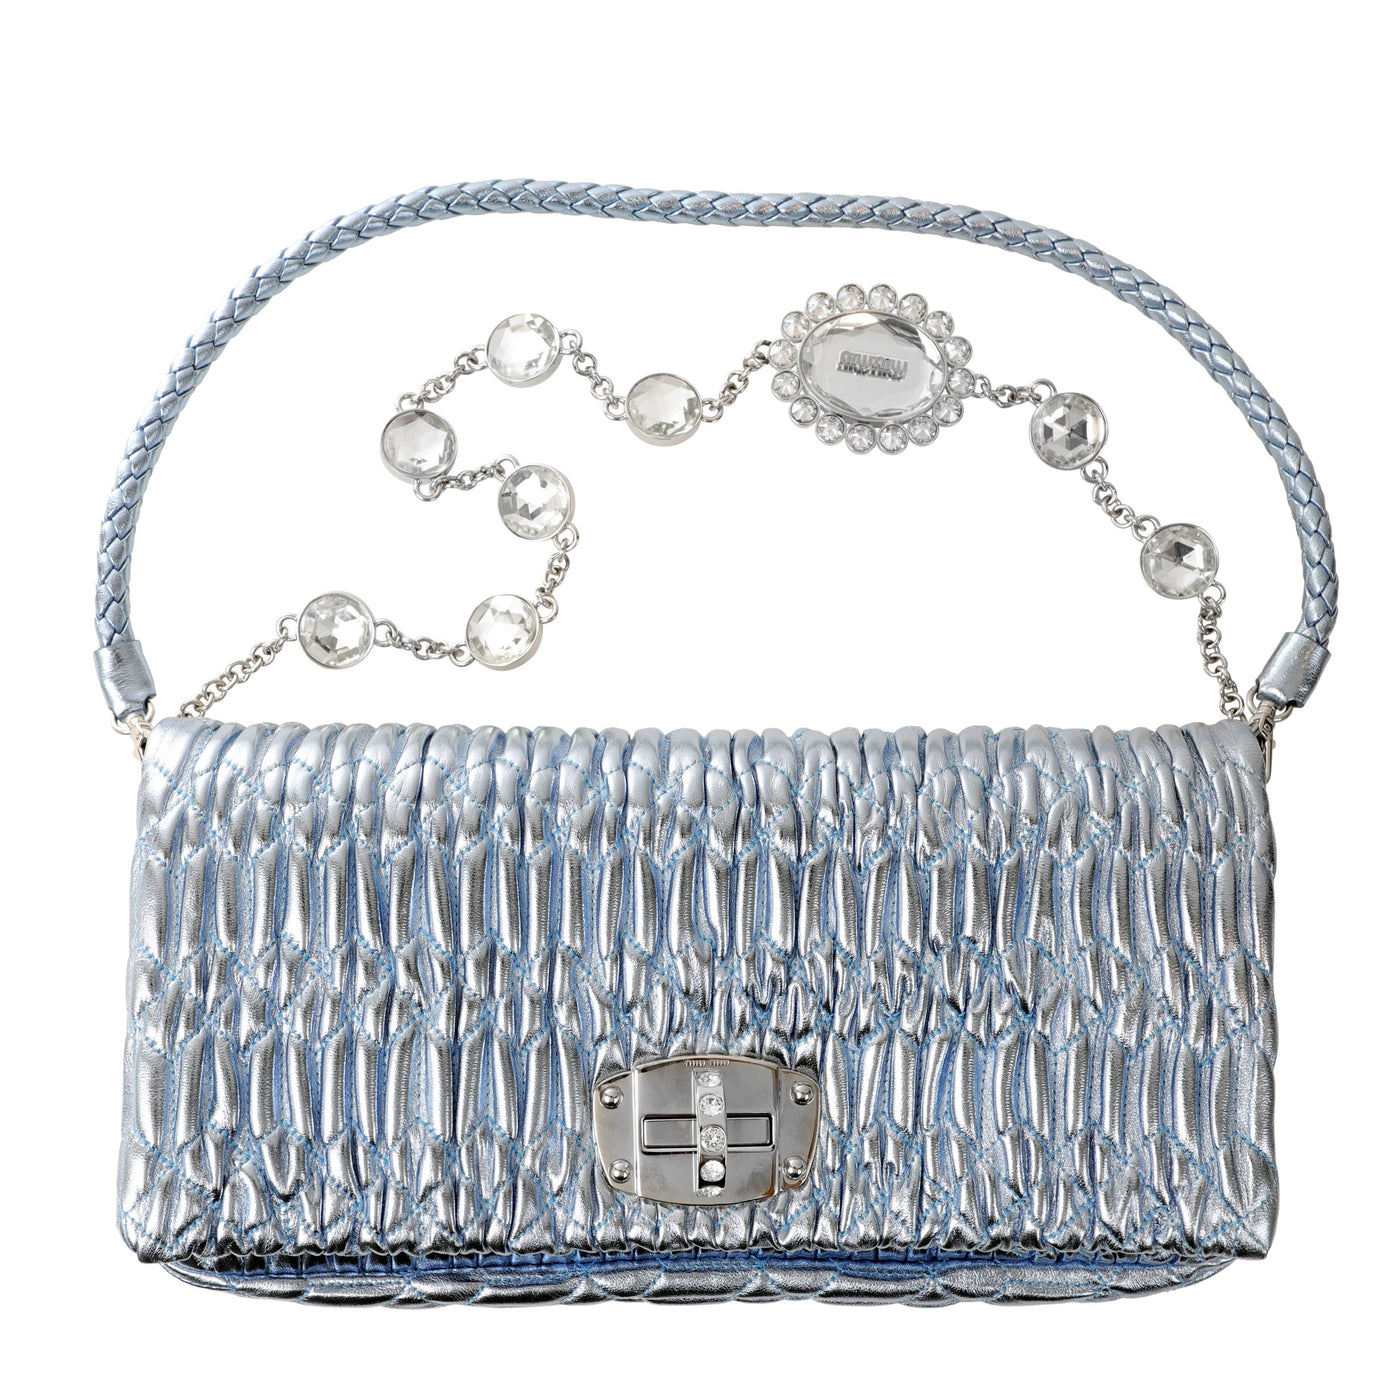 Miu Miu Metallic Blue Iconic Crystal Cloquè Small Shoulder Bag with Silver Hardware